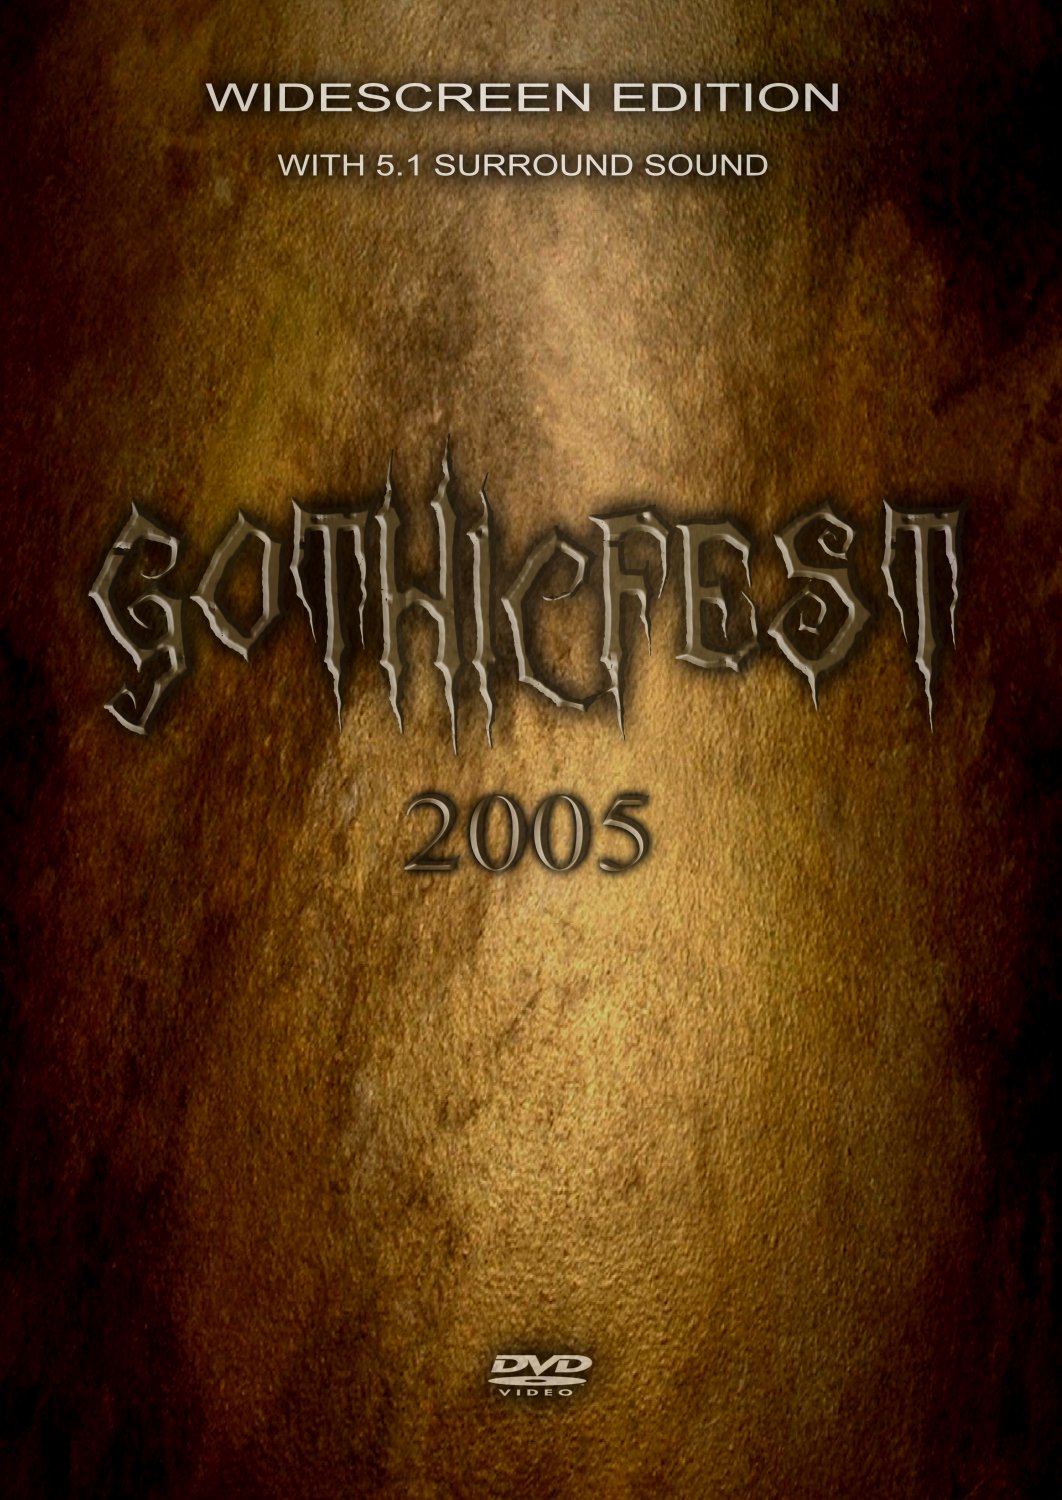 Gothicfest 2005 (USB) Flash Drive